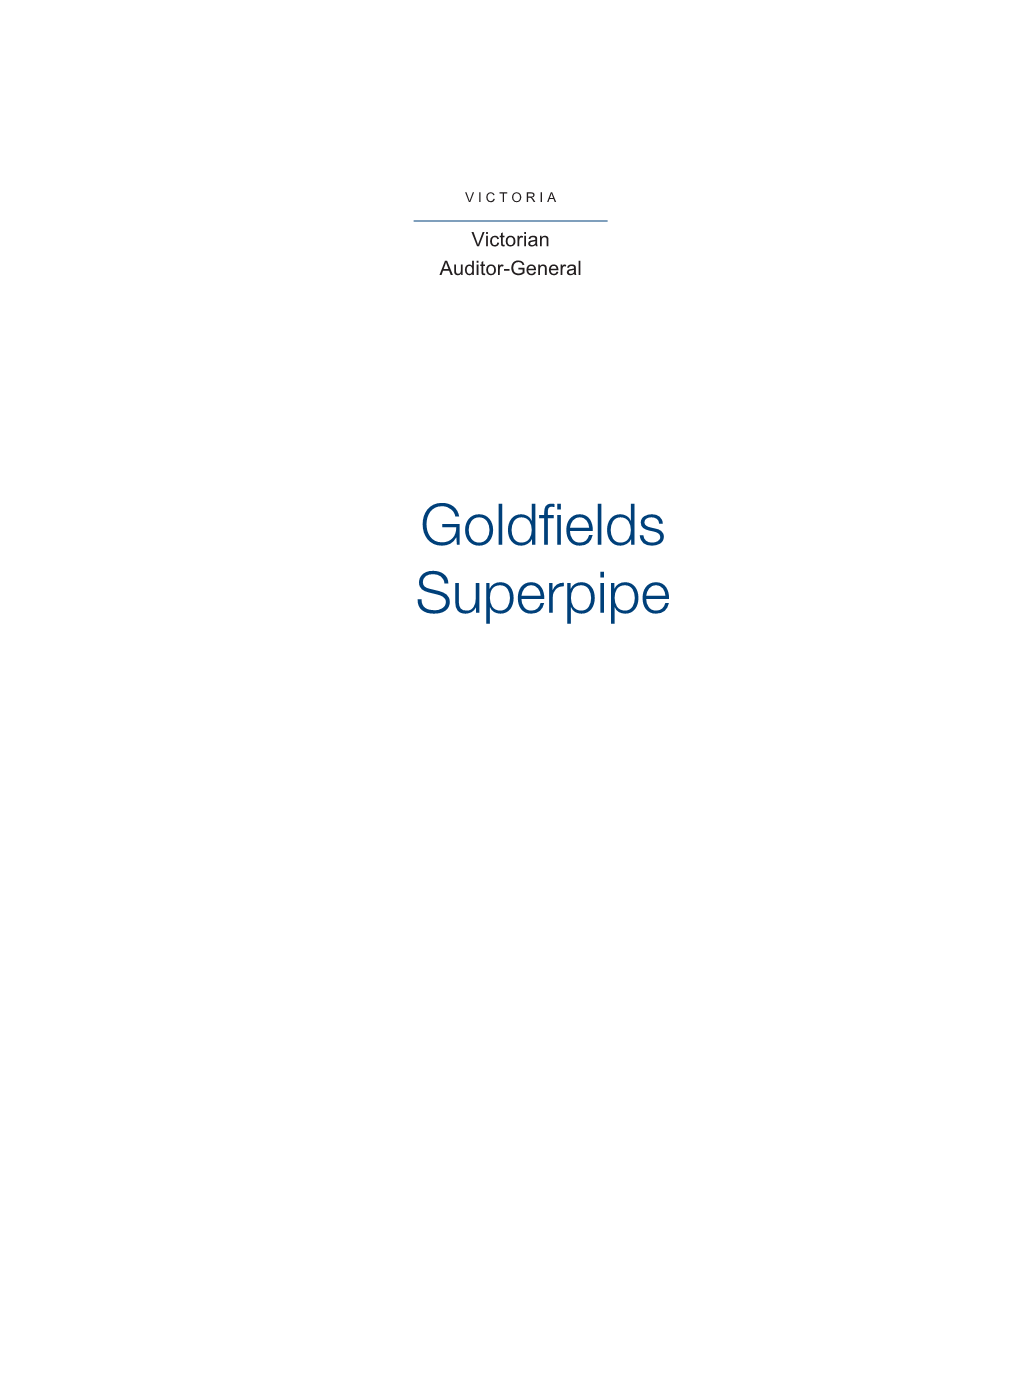 Goldfields Superpipe